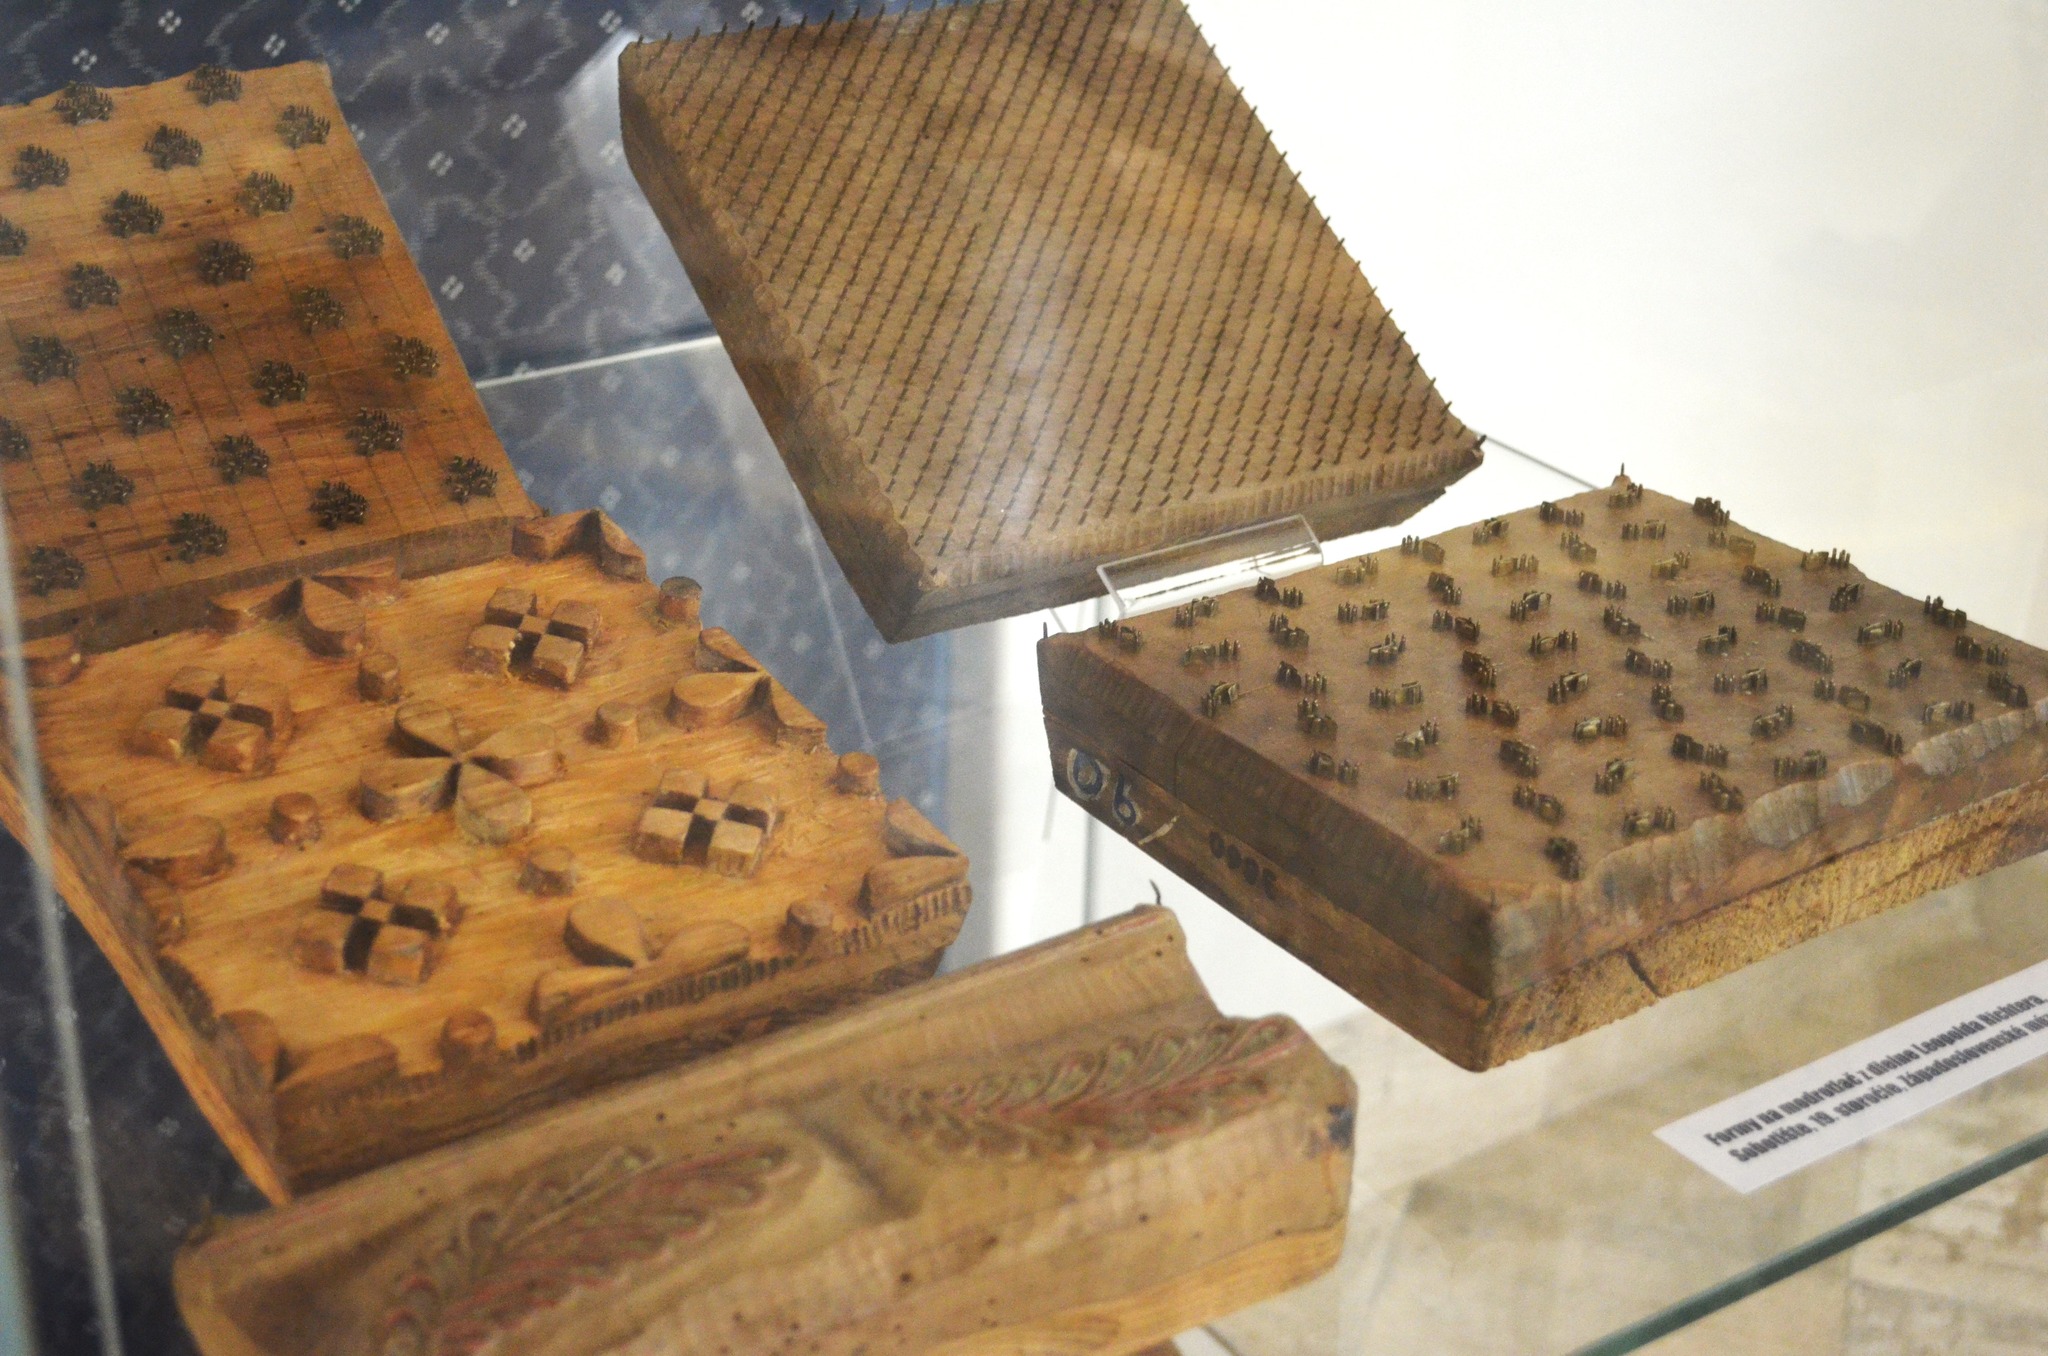 Výstava modrotlače, Záhorské múzeum v Skalici